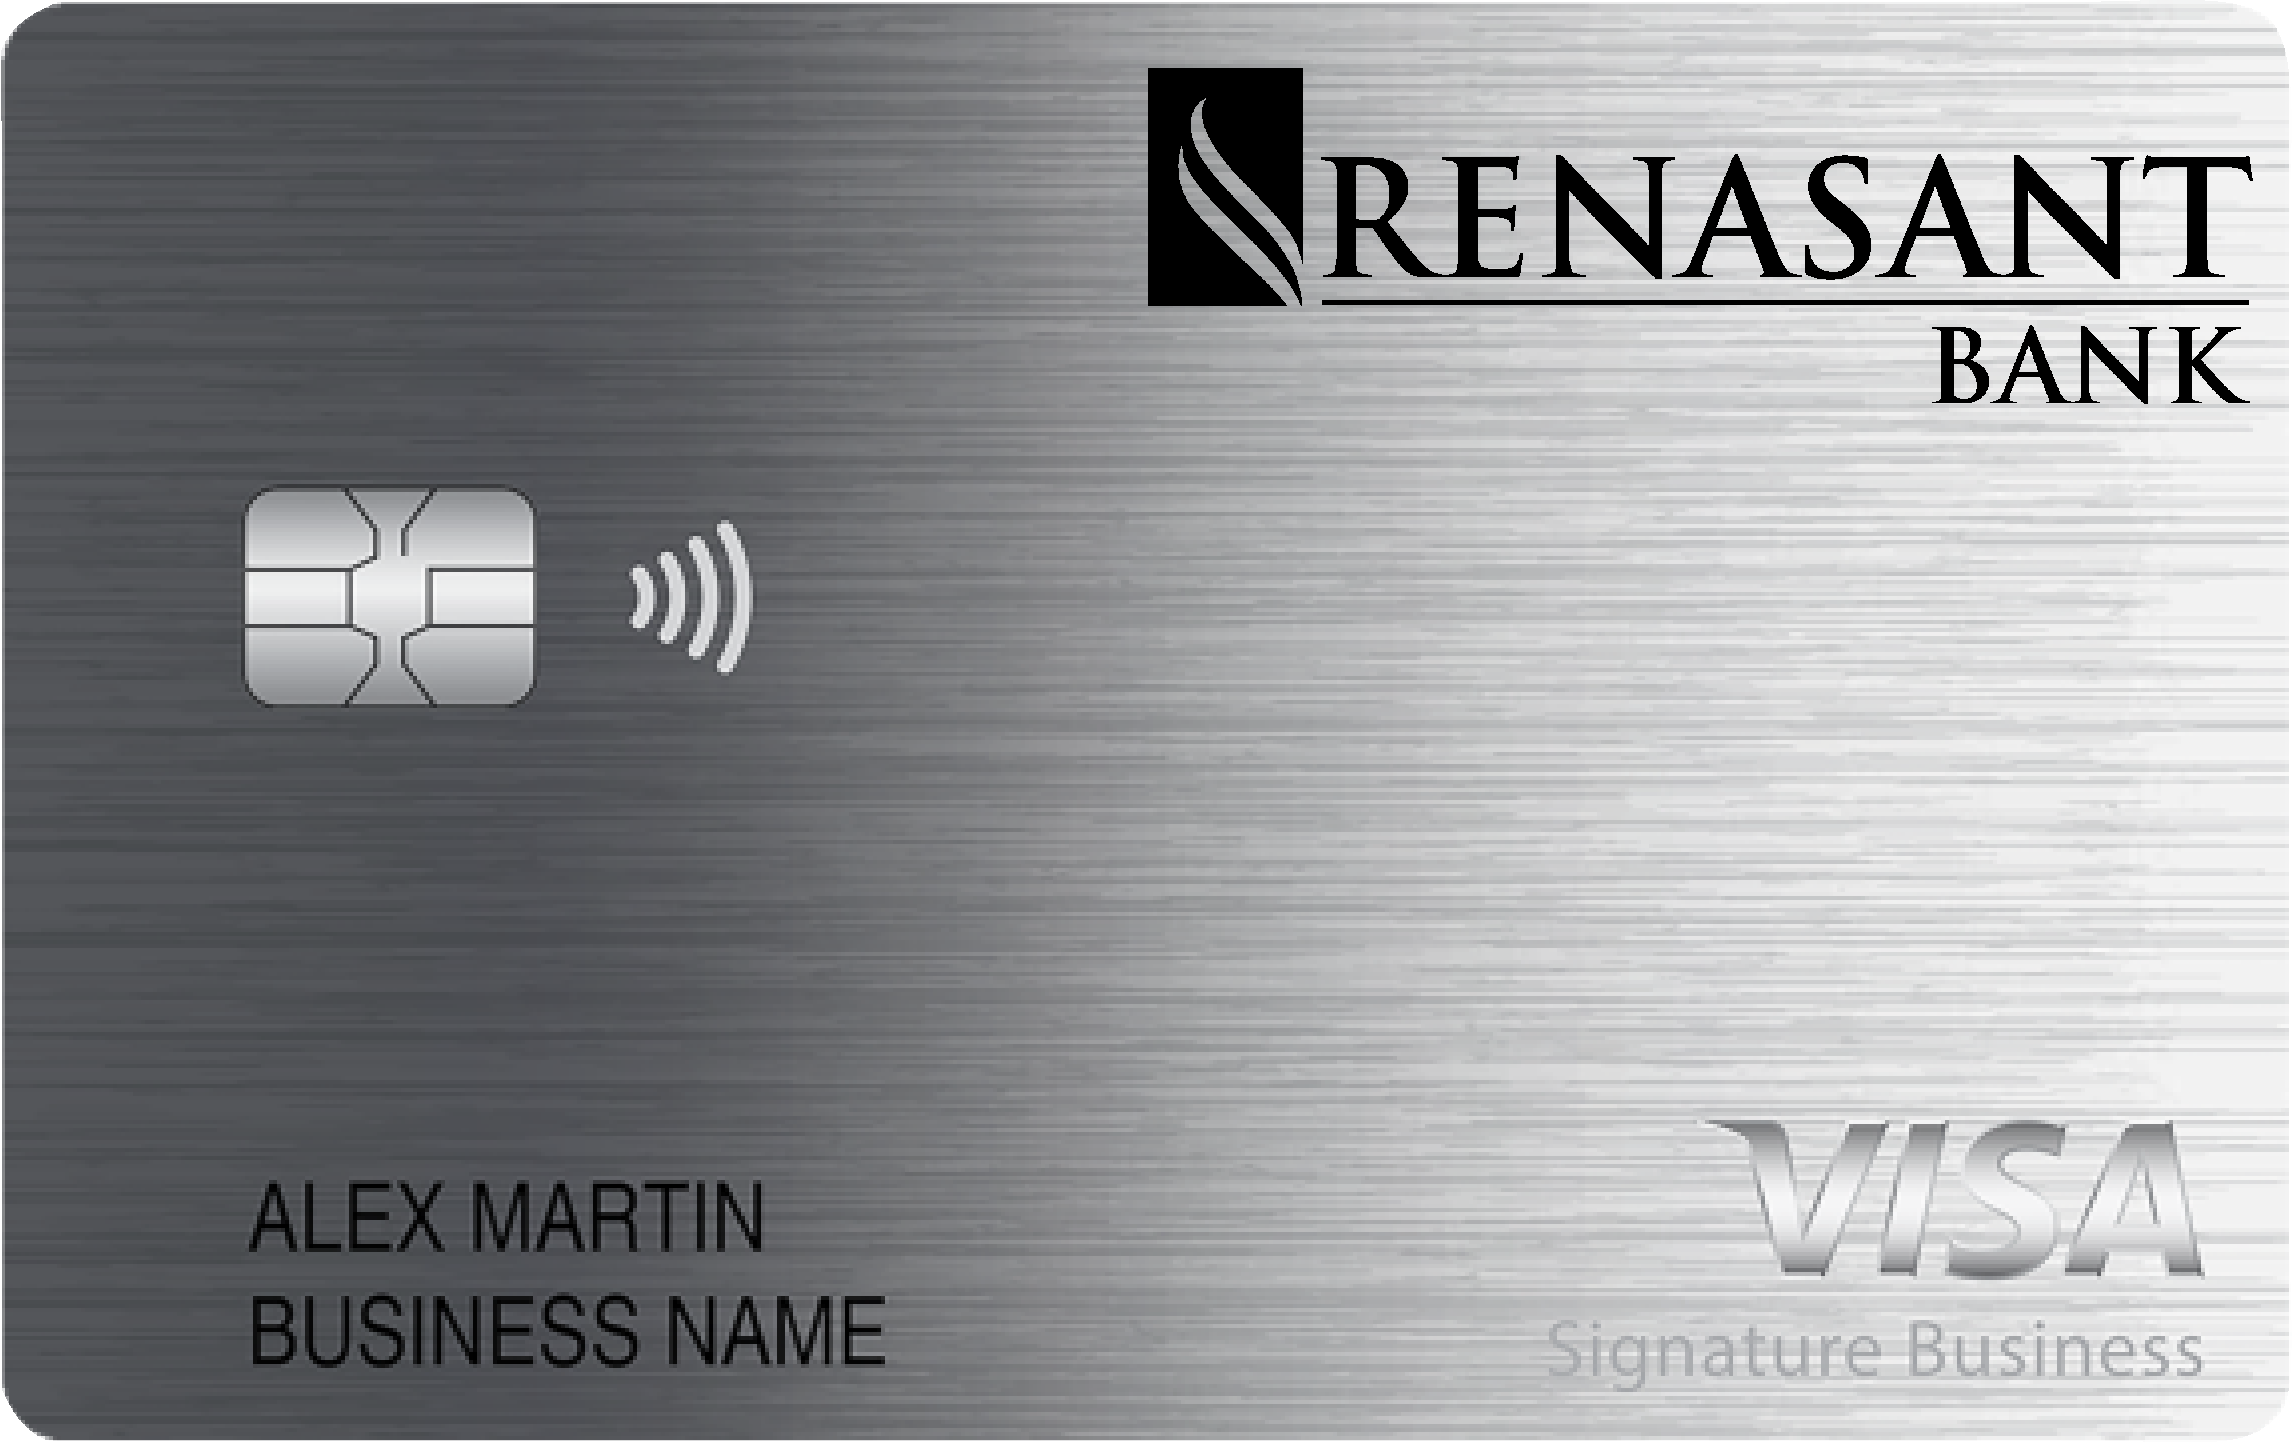 Renasant Bank Smart Business Rewards Card